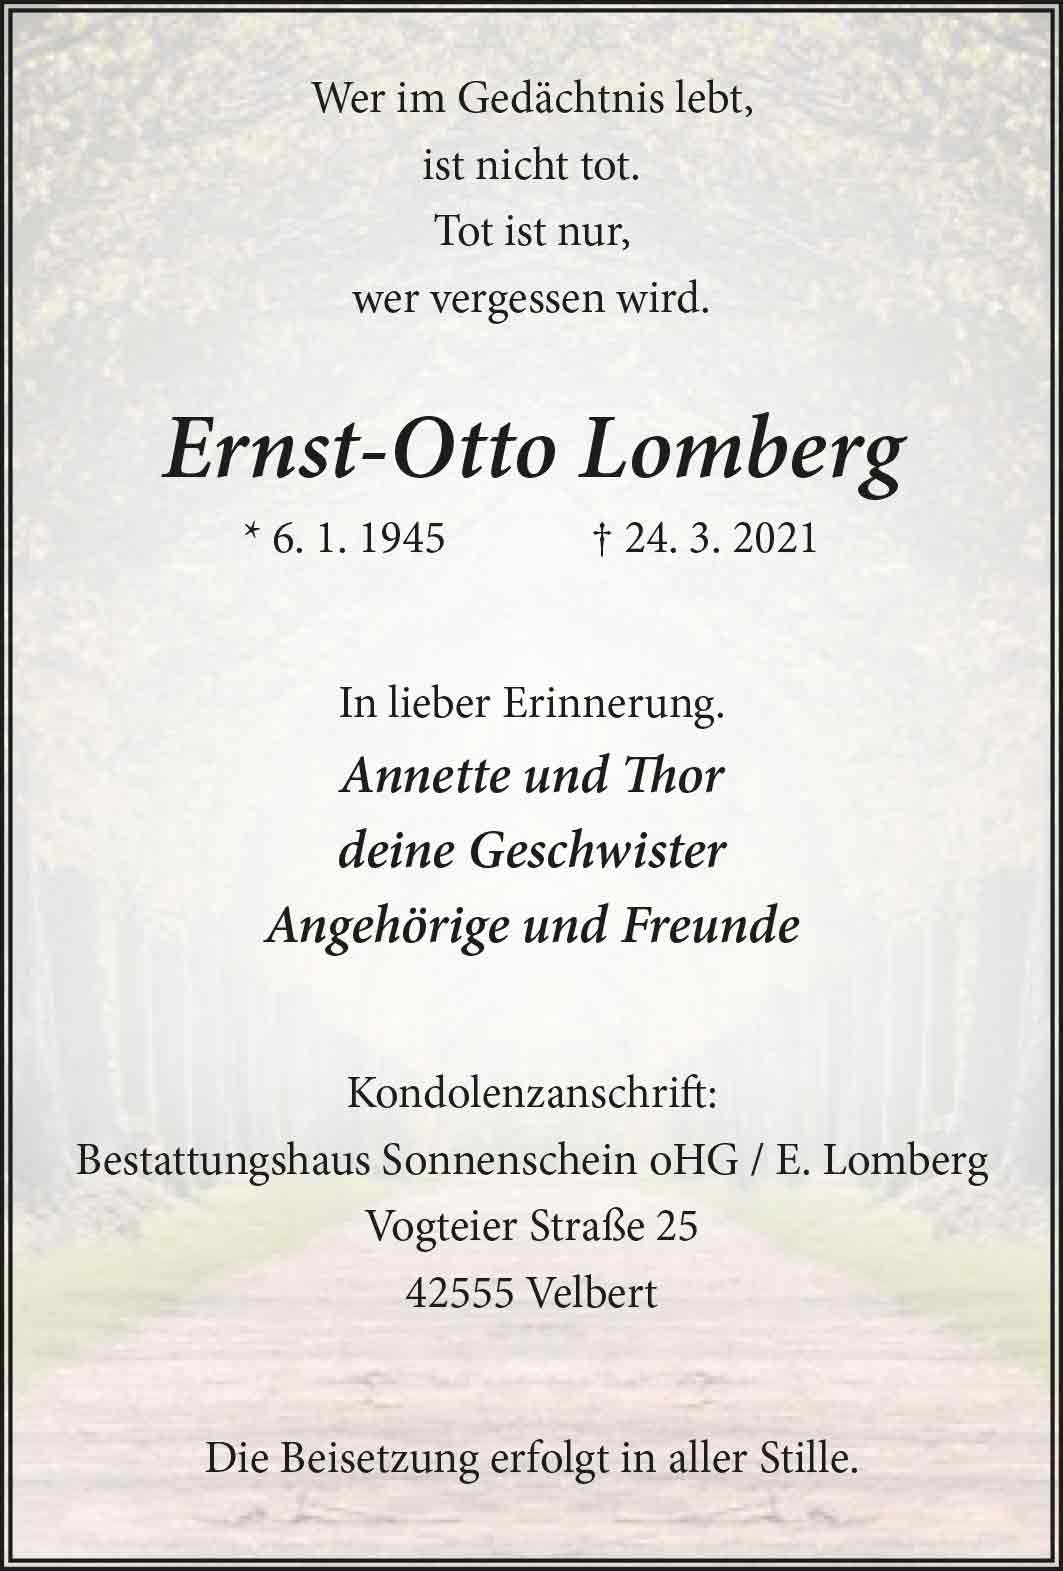 Ernst-Otto Lomberg † 24. 3. 2021